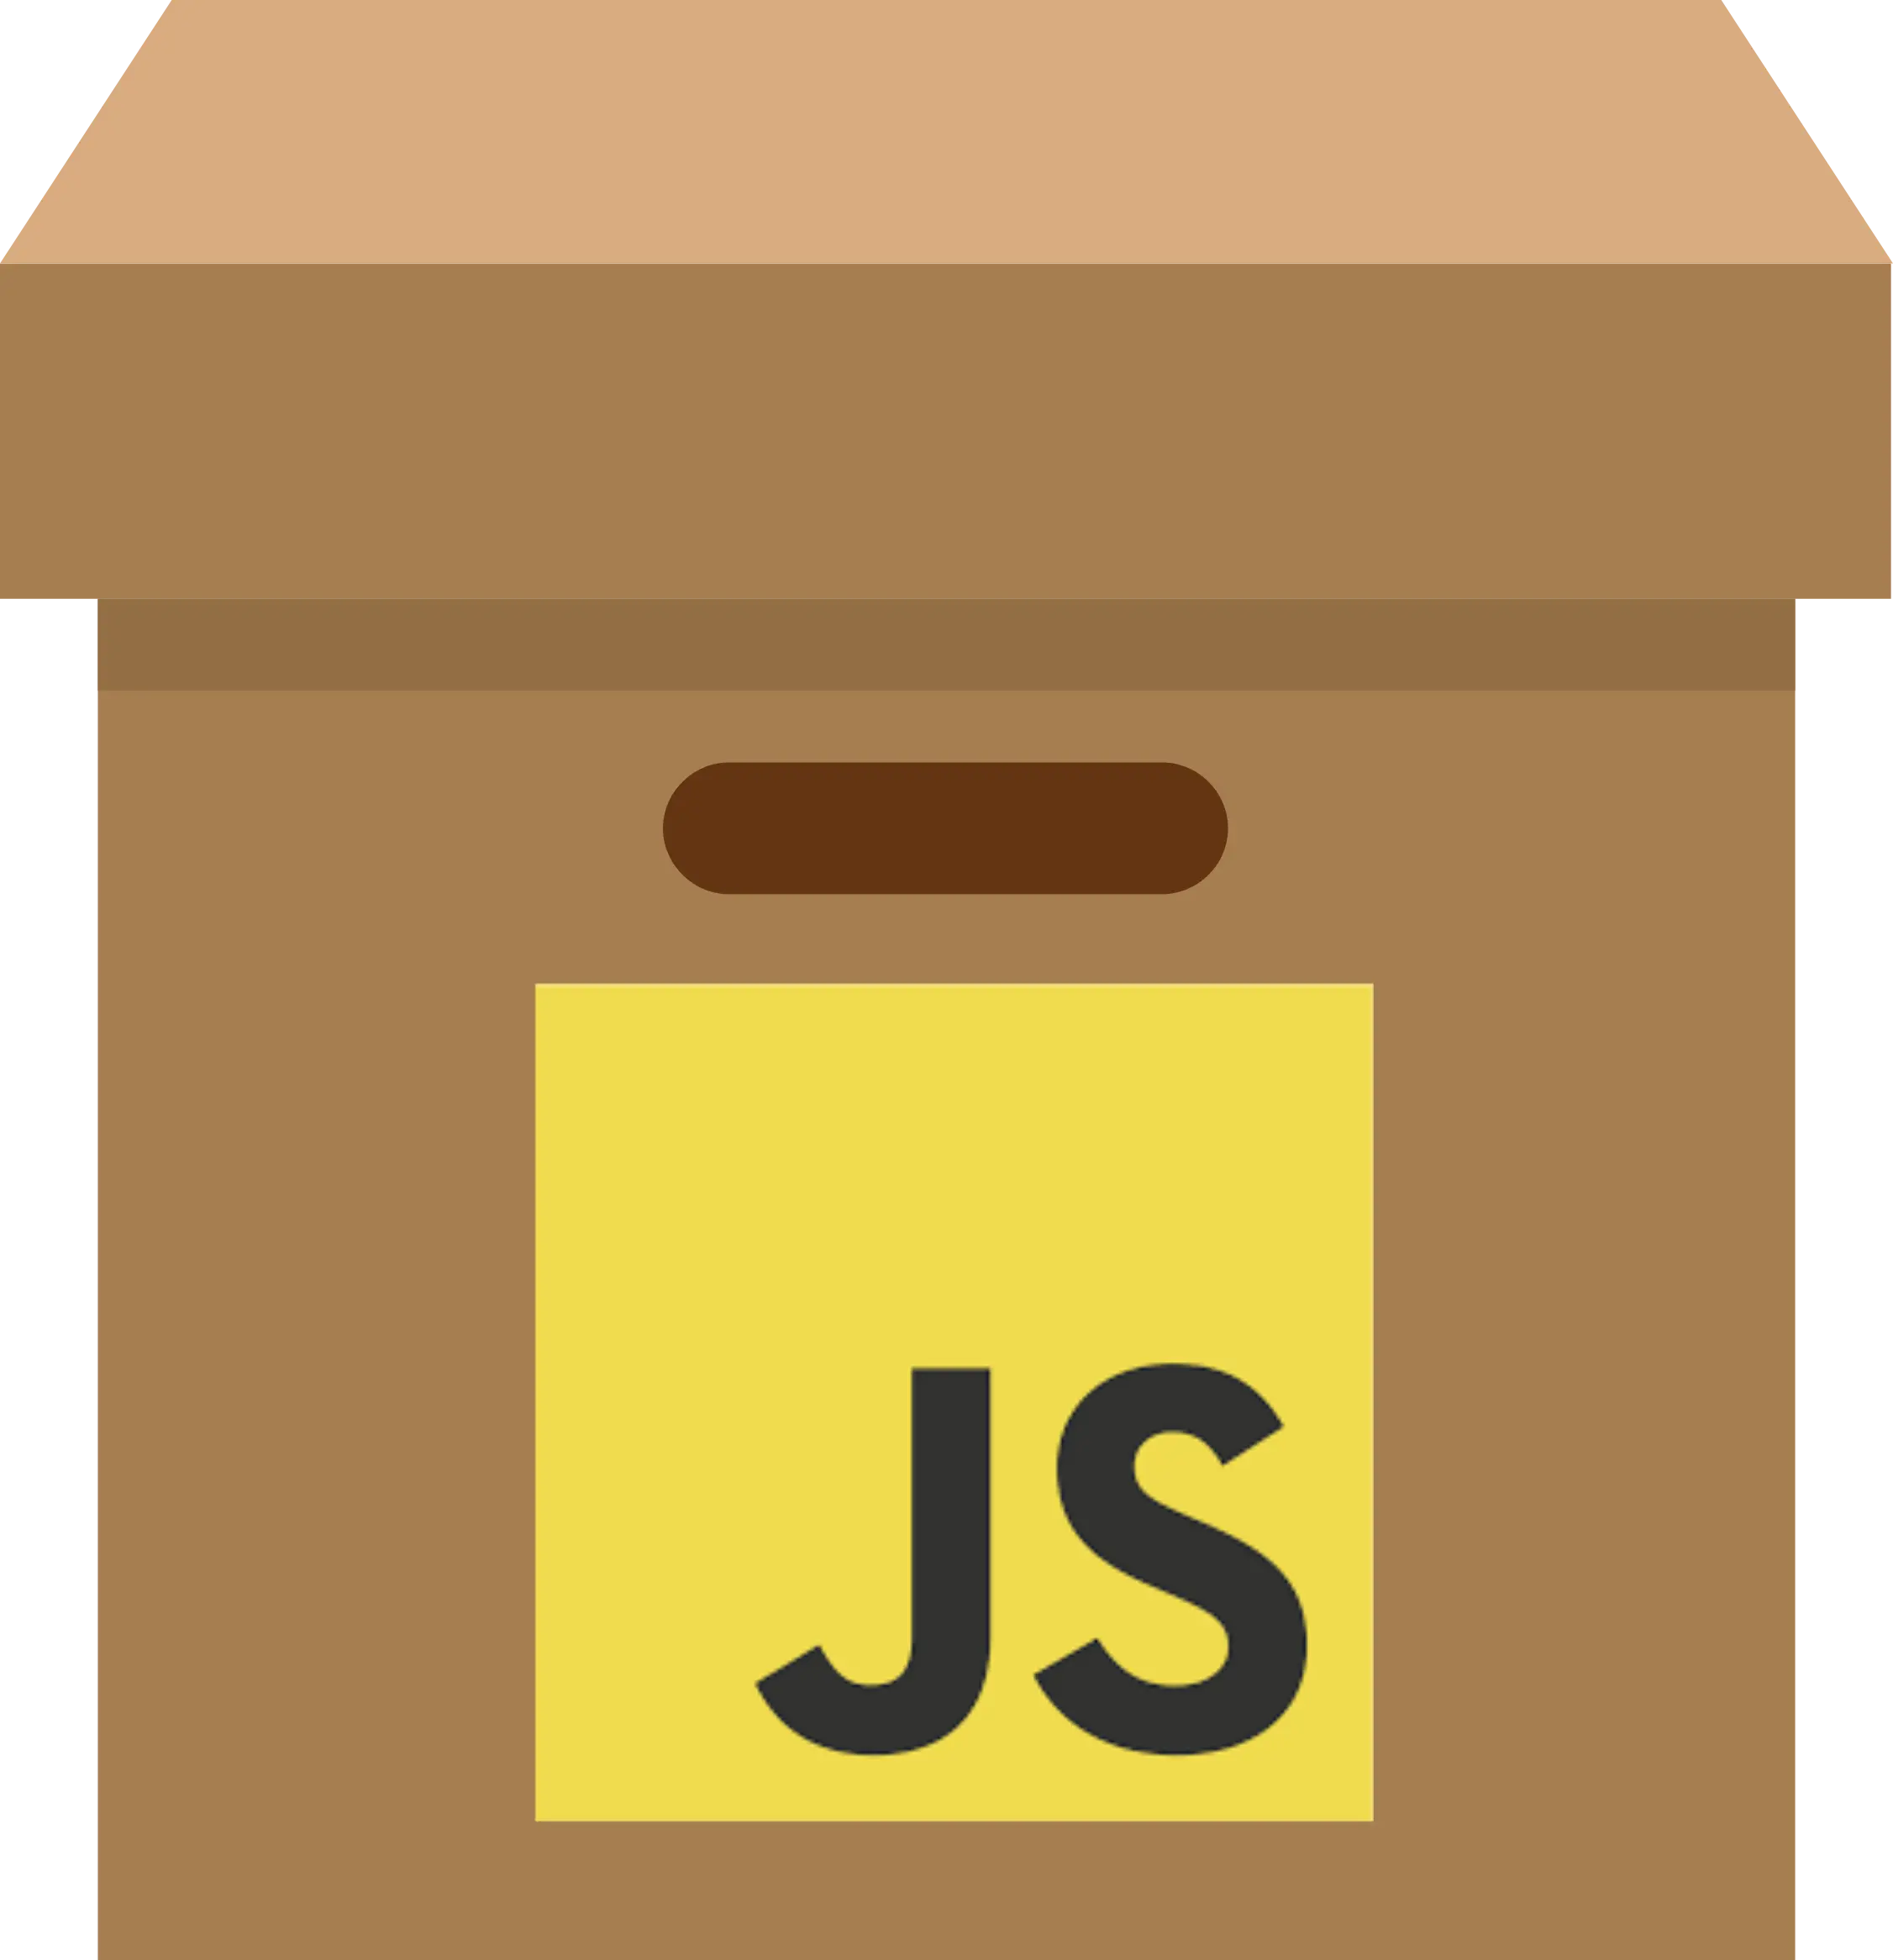 Full JavaScript Complete Pack